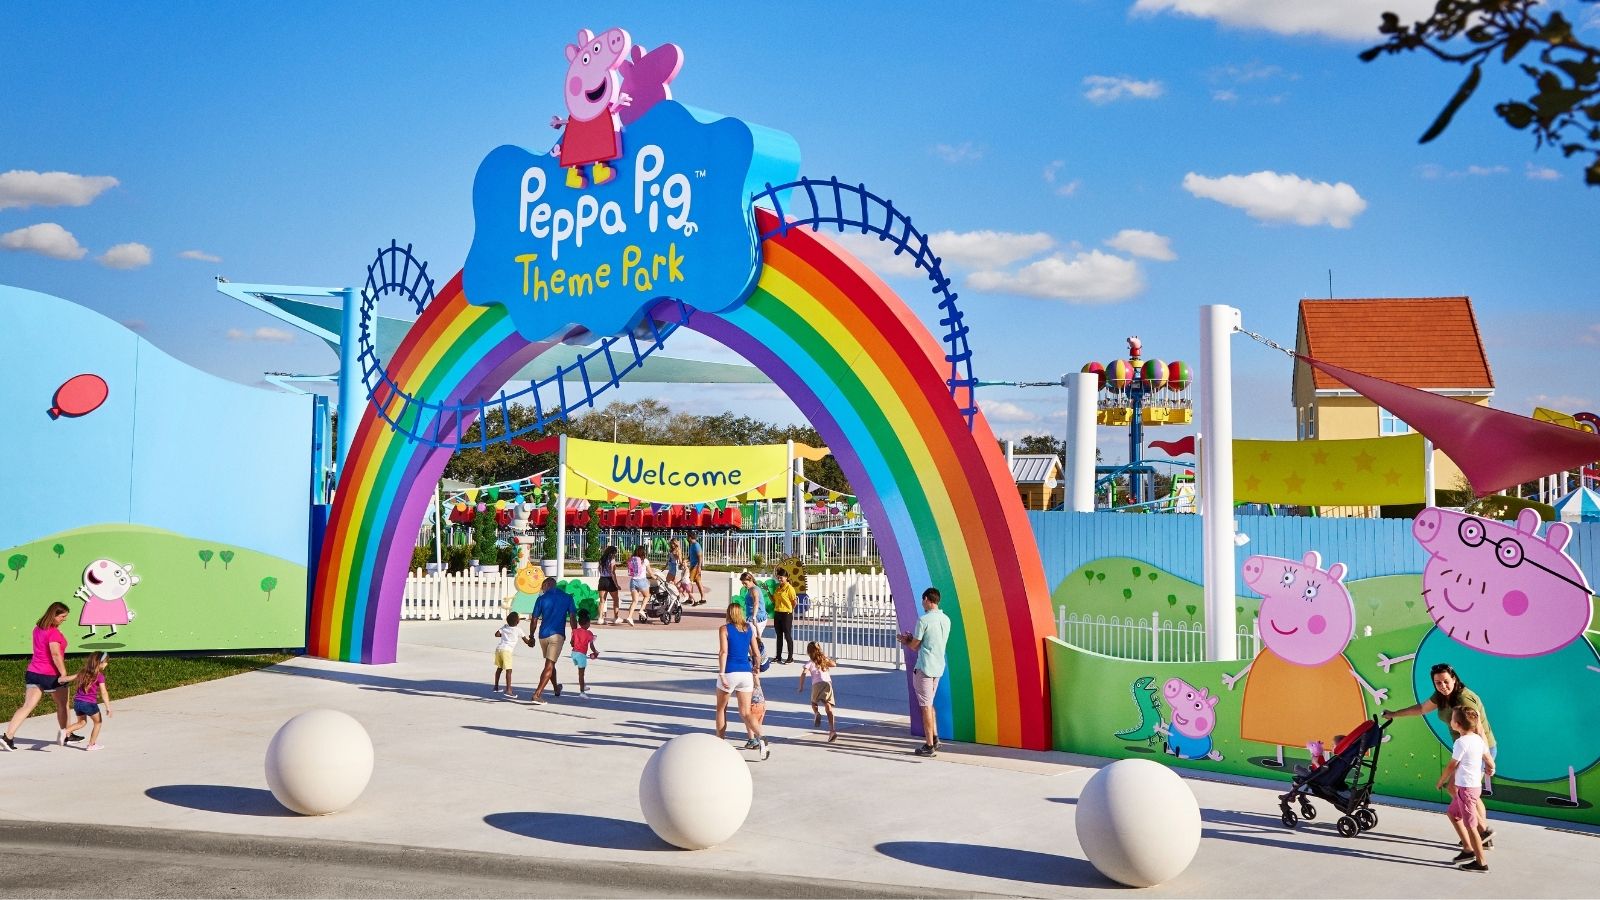 Rainbow entrance to Peppa Pig Theme Park (Photo: Pegga Pig Theme Park)